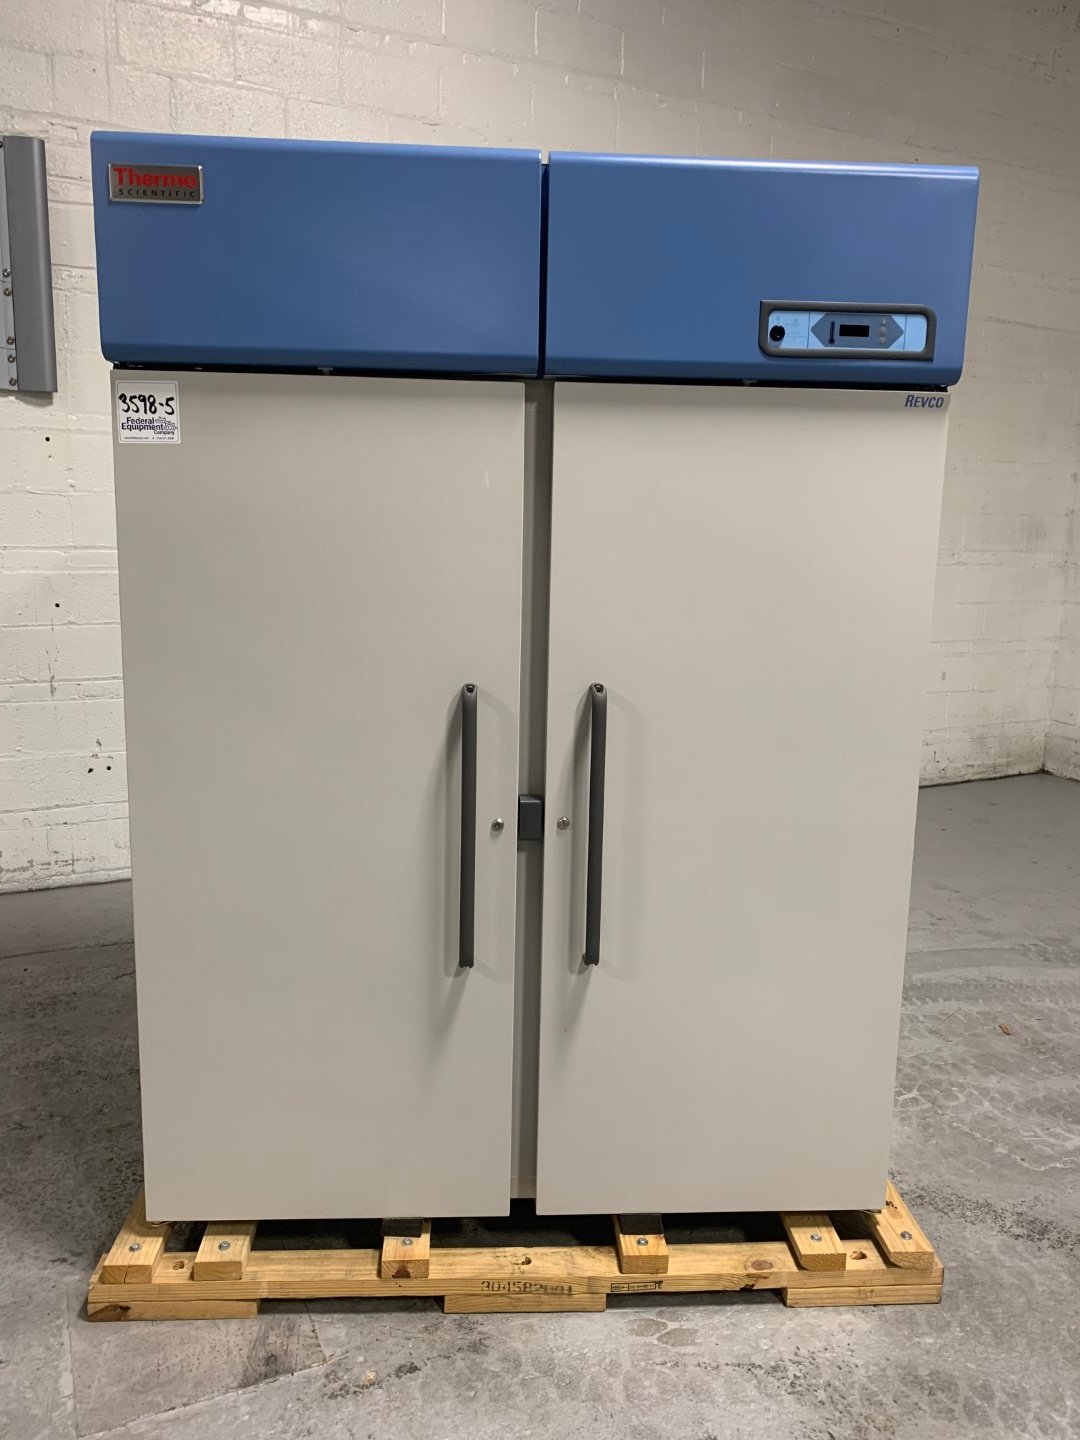 51.1 Cu Ft Thermo Fisher Scientific Lab Freezer, Model ULT5030A